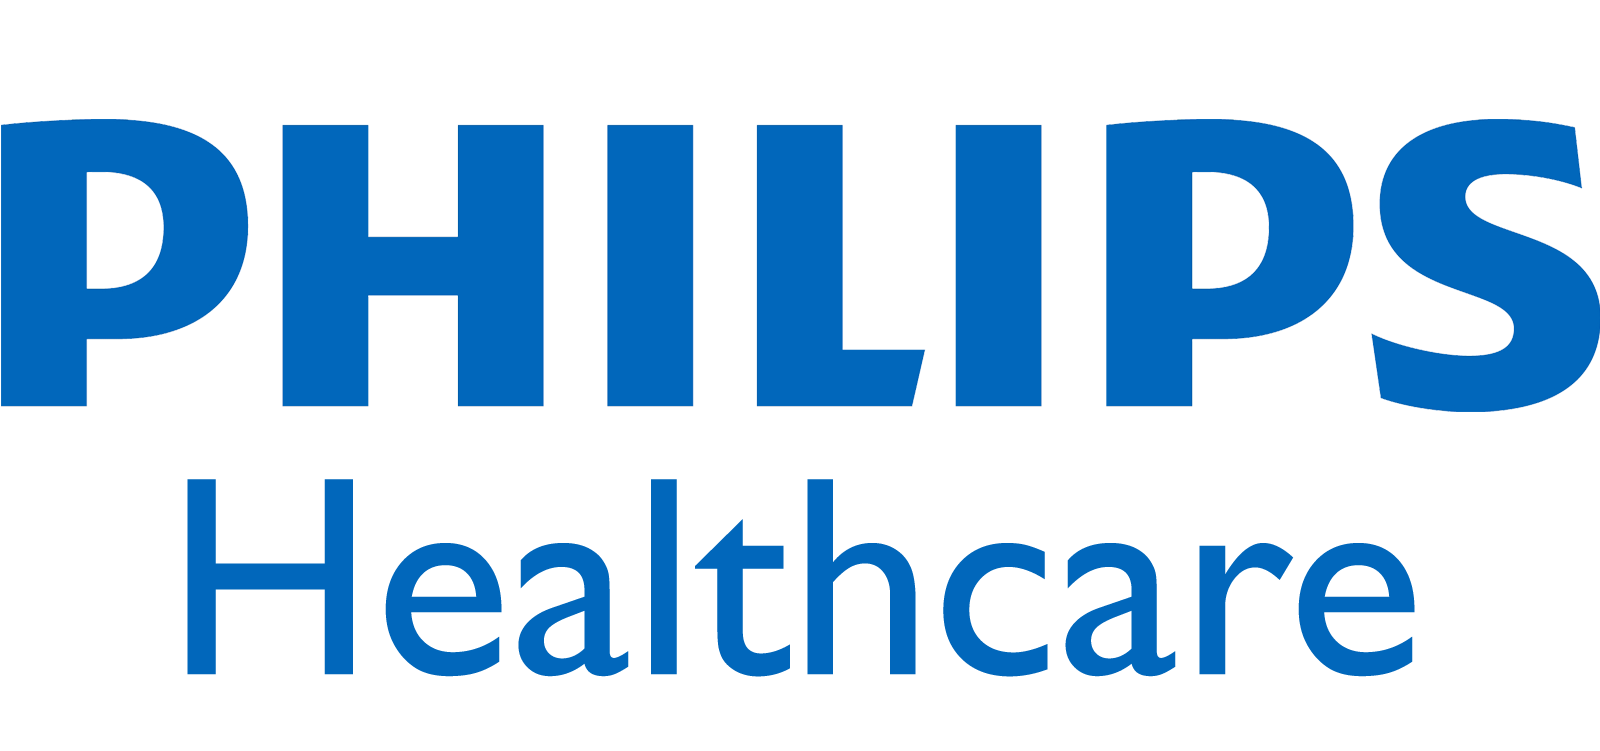 PHILIPS Logo